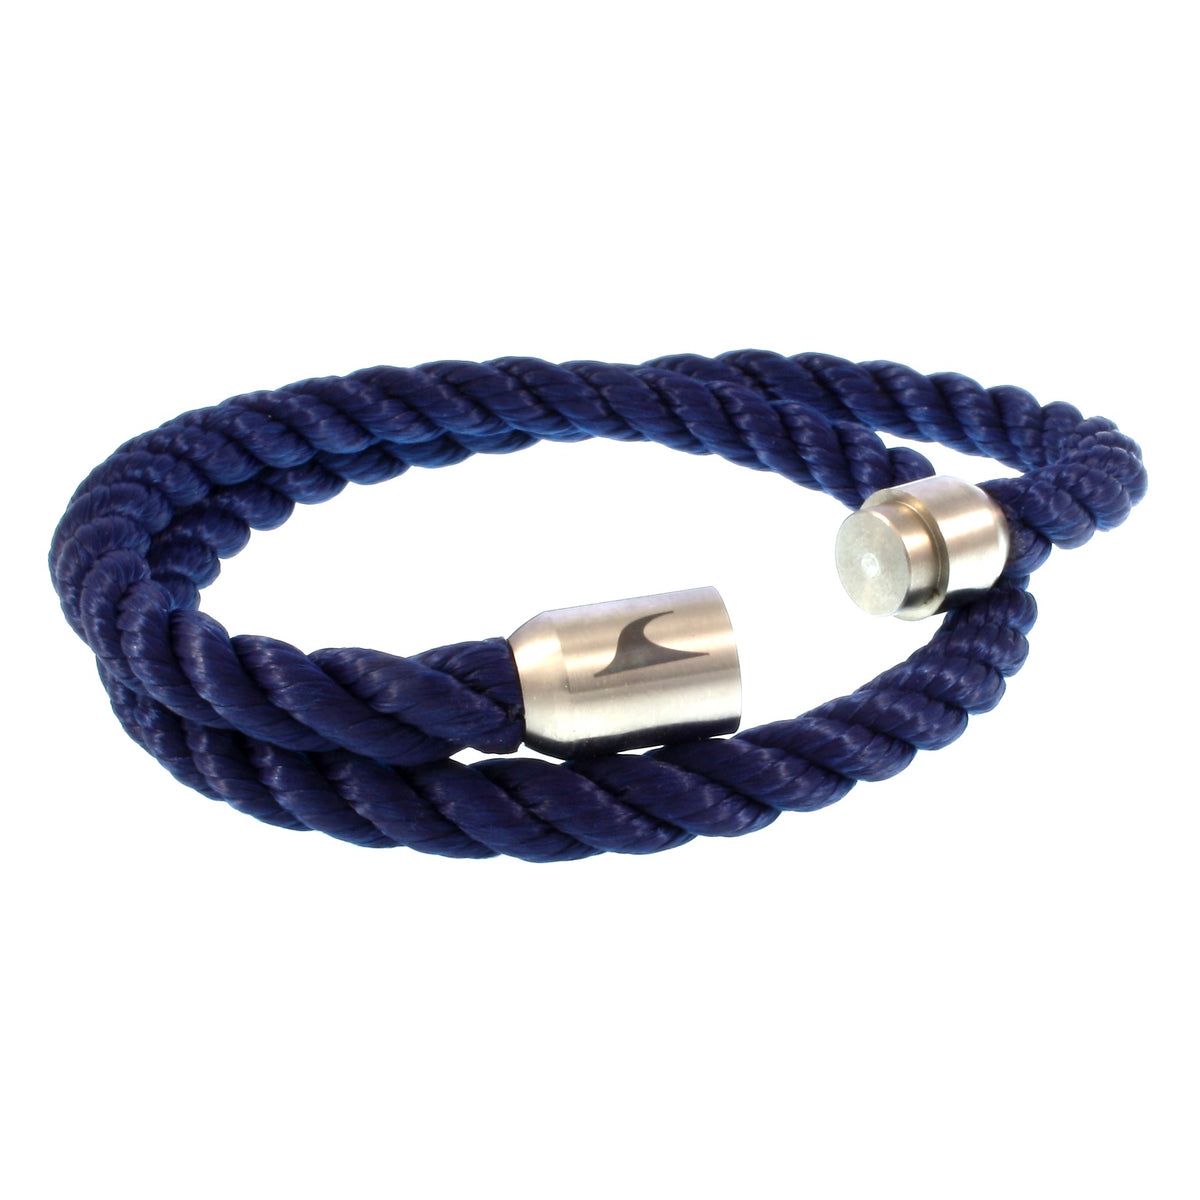 Herren-Segeltau-Armband-hawaii-blau-Edelstahlverschluss-offen-wavepirate-shop-k